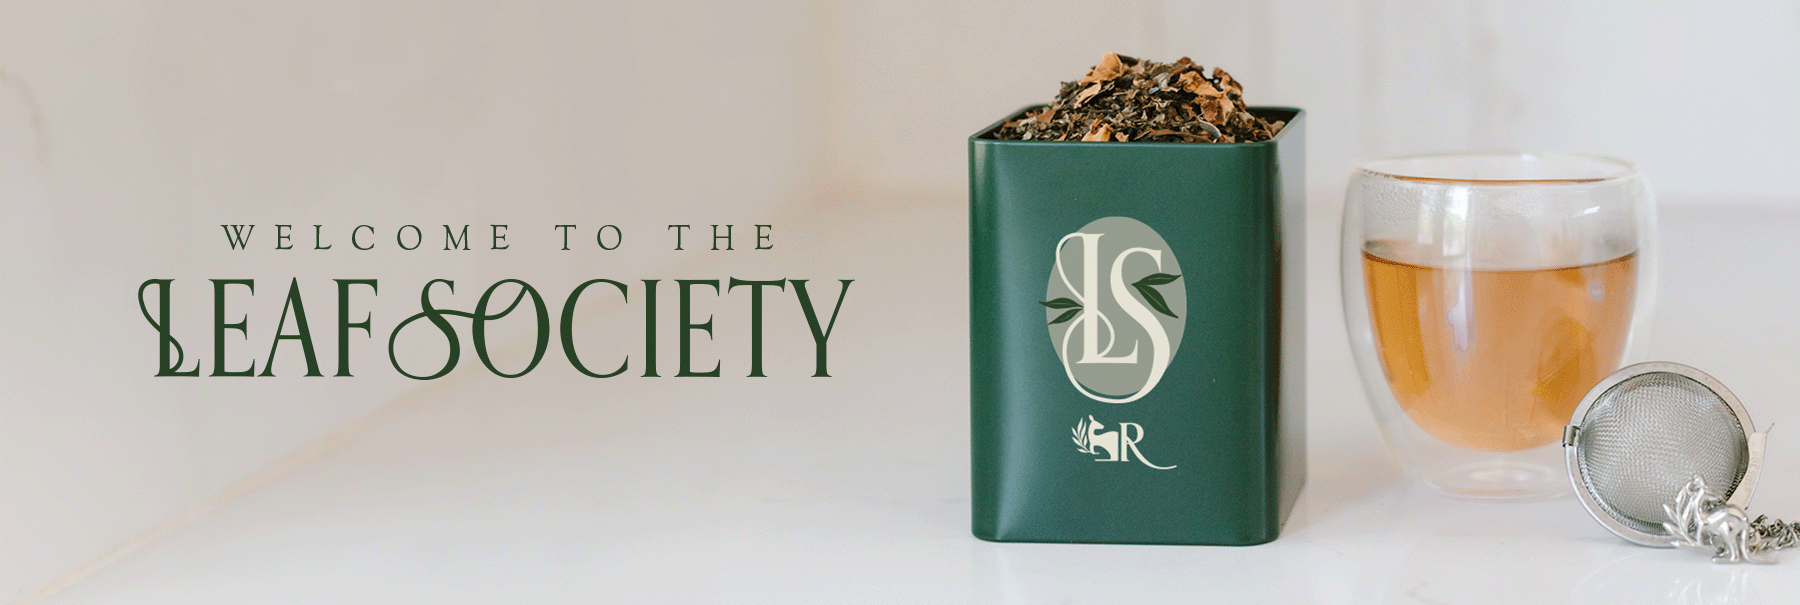 Leaf Society Banner